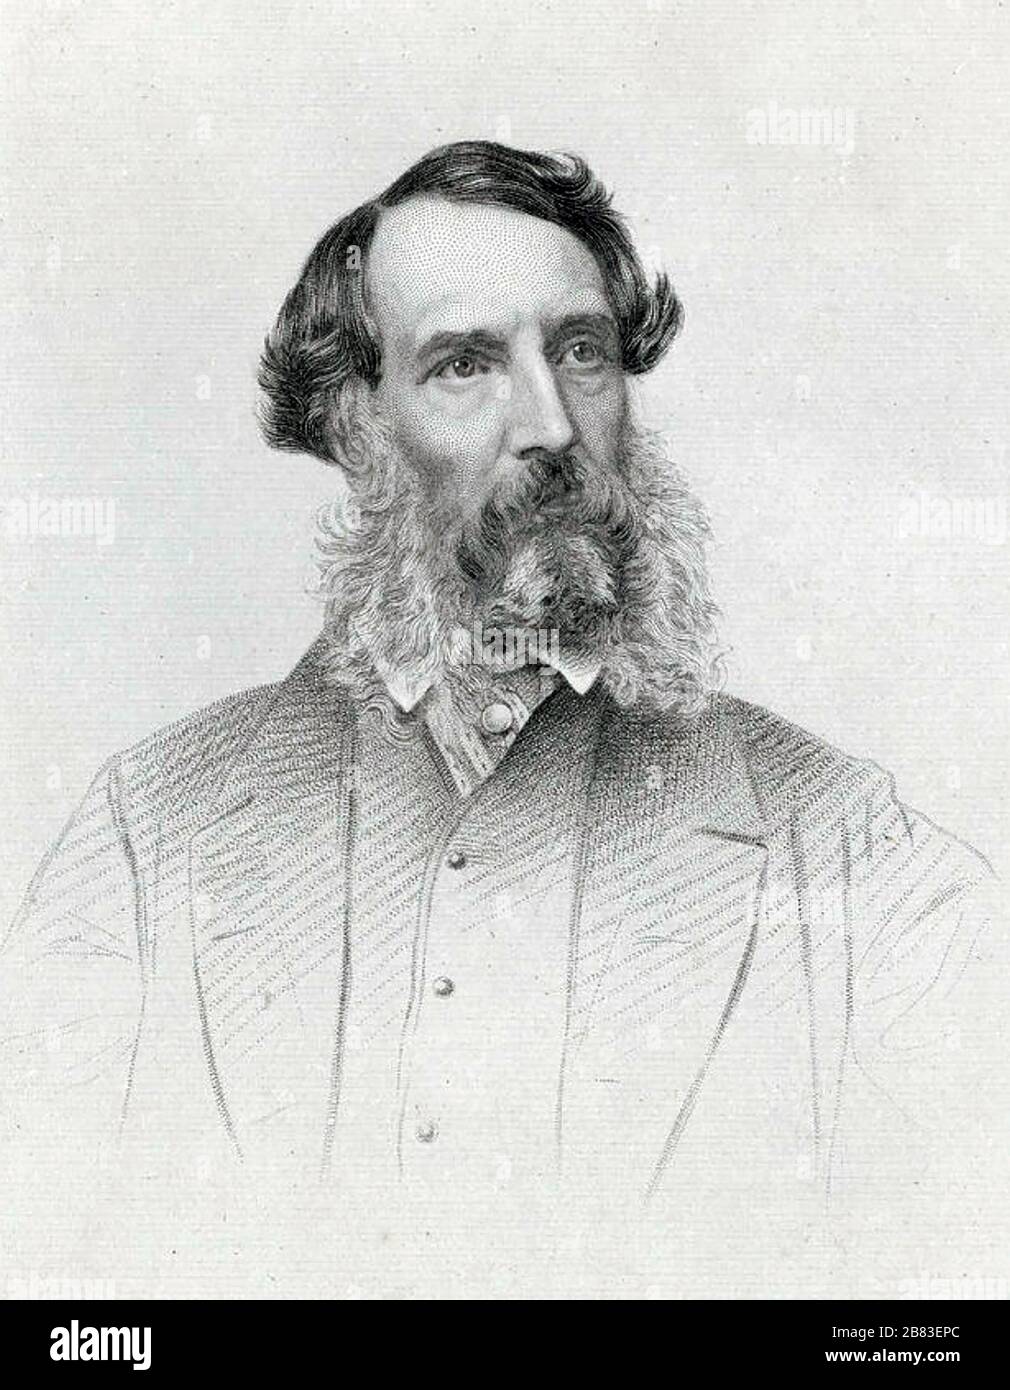 EDWARD EYRE (1815-1901) English colonial administrator and explorer of Australia Stock Photo